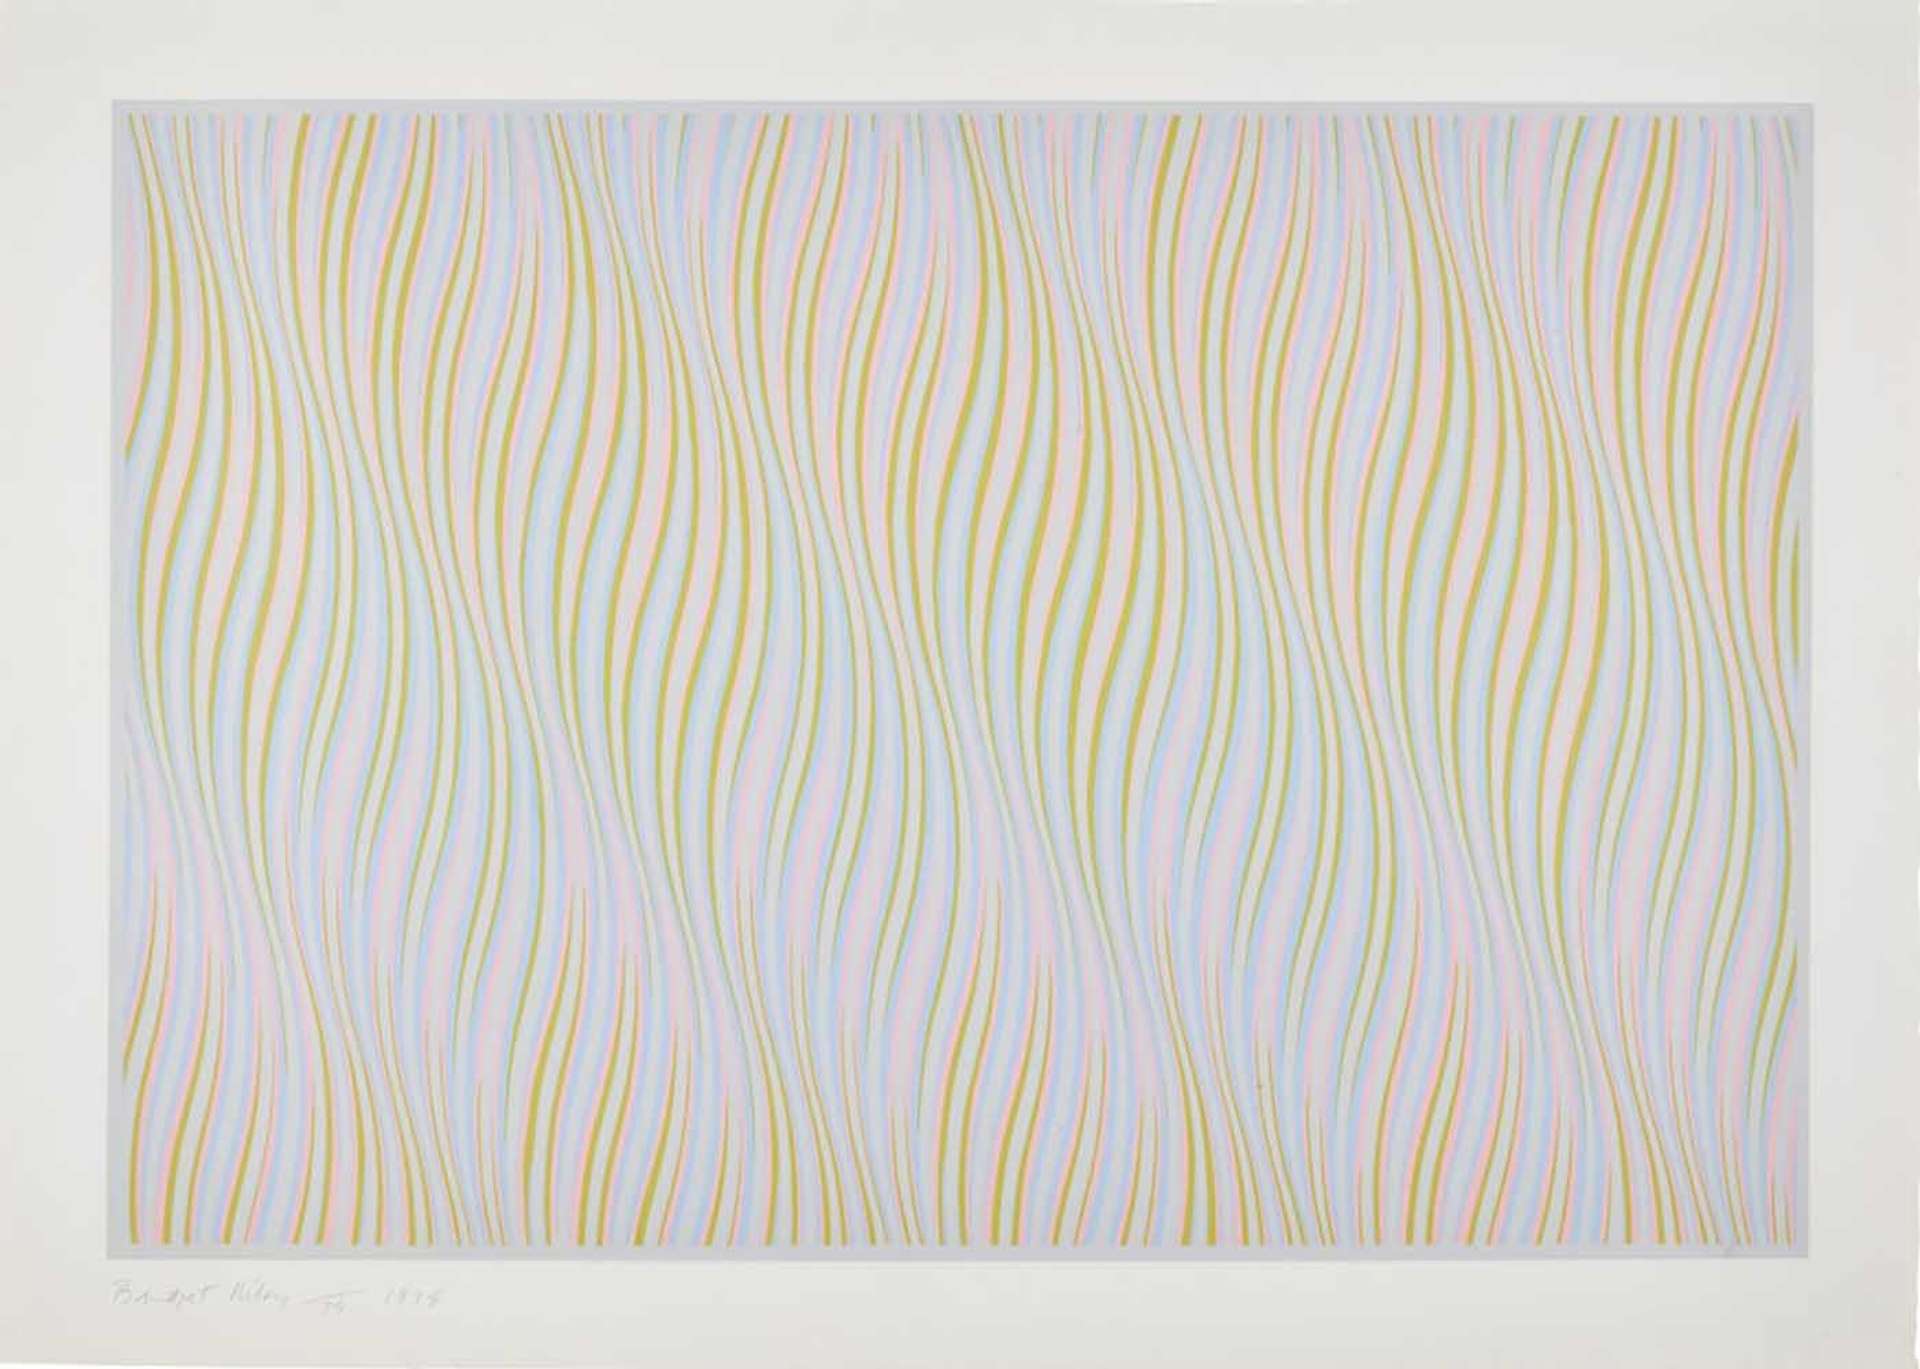 Bridget Riley’s Untitled (Rose). An Op Art screenprint of multicoloured wave patterns. 